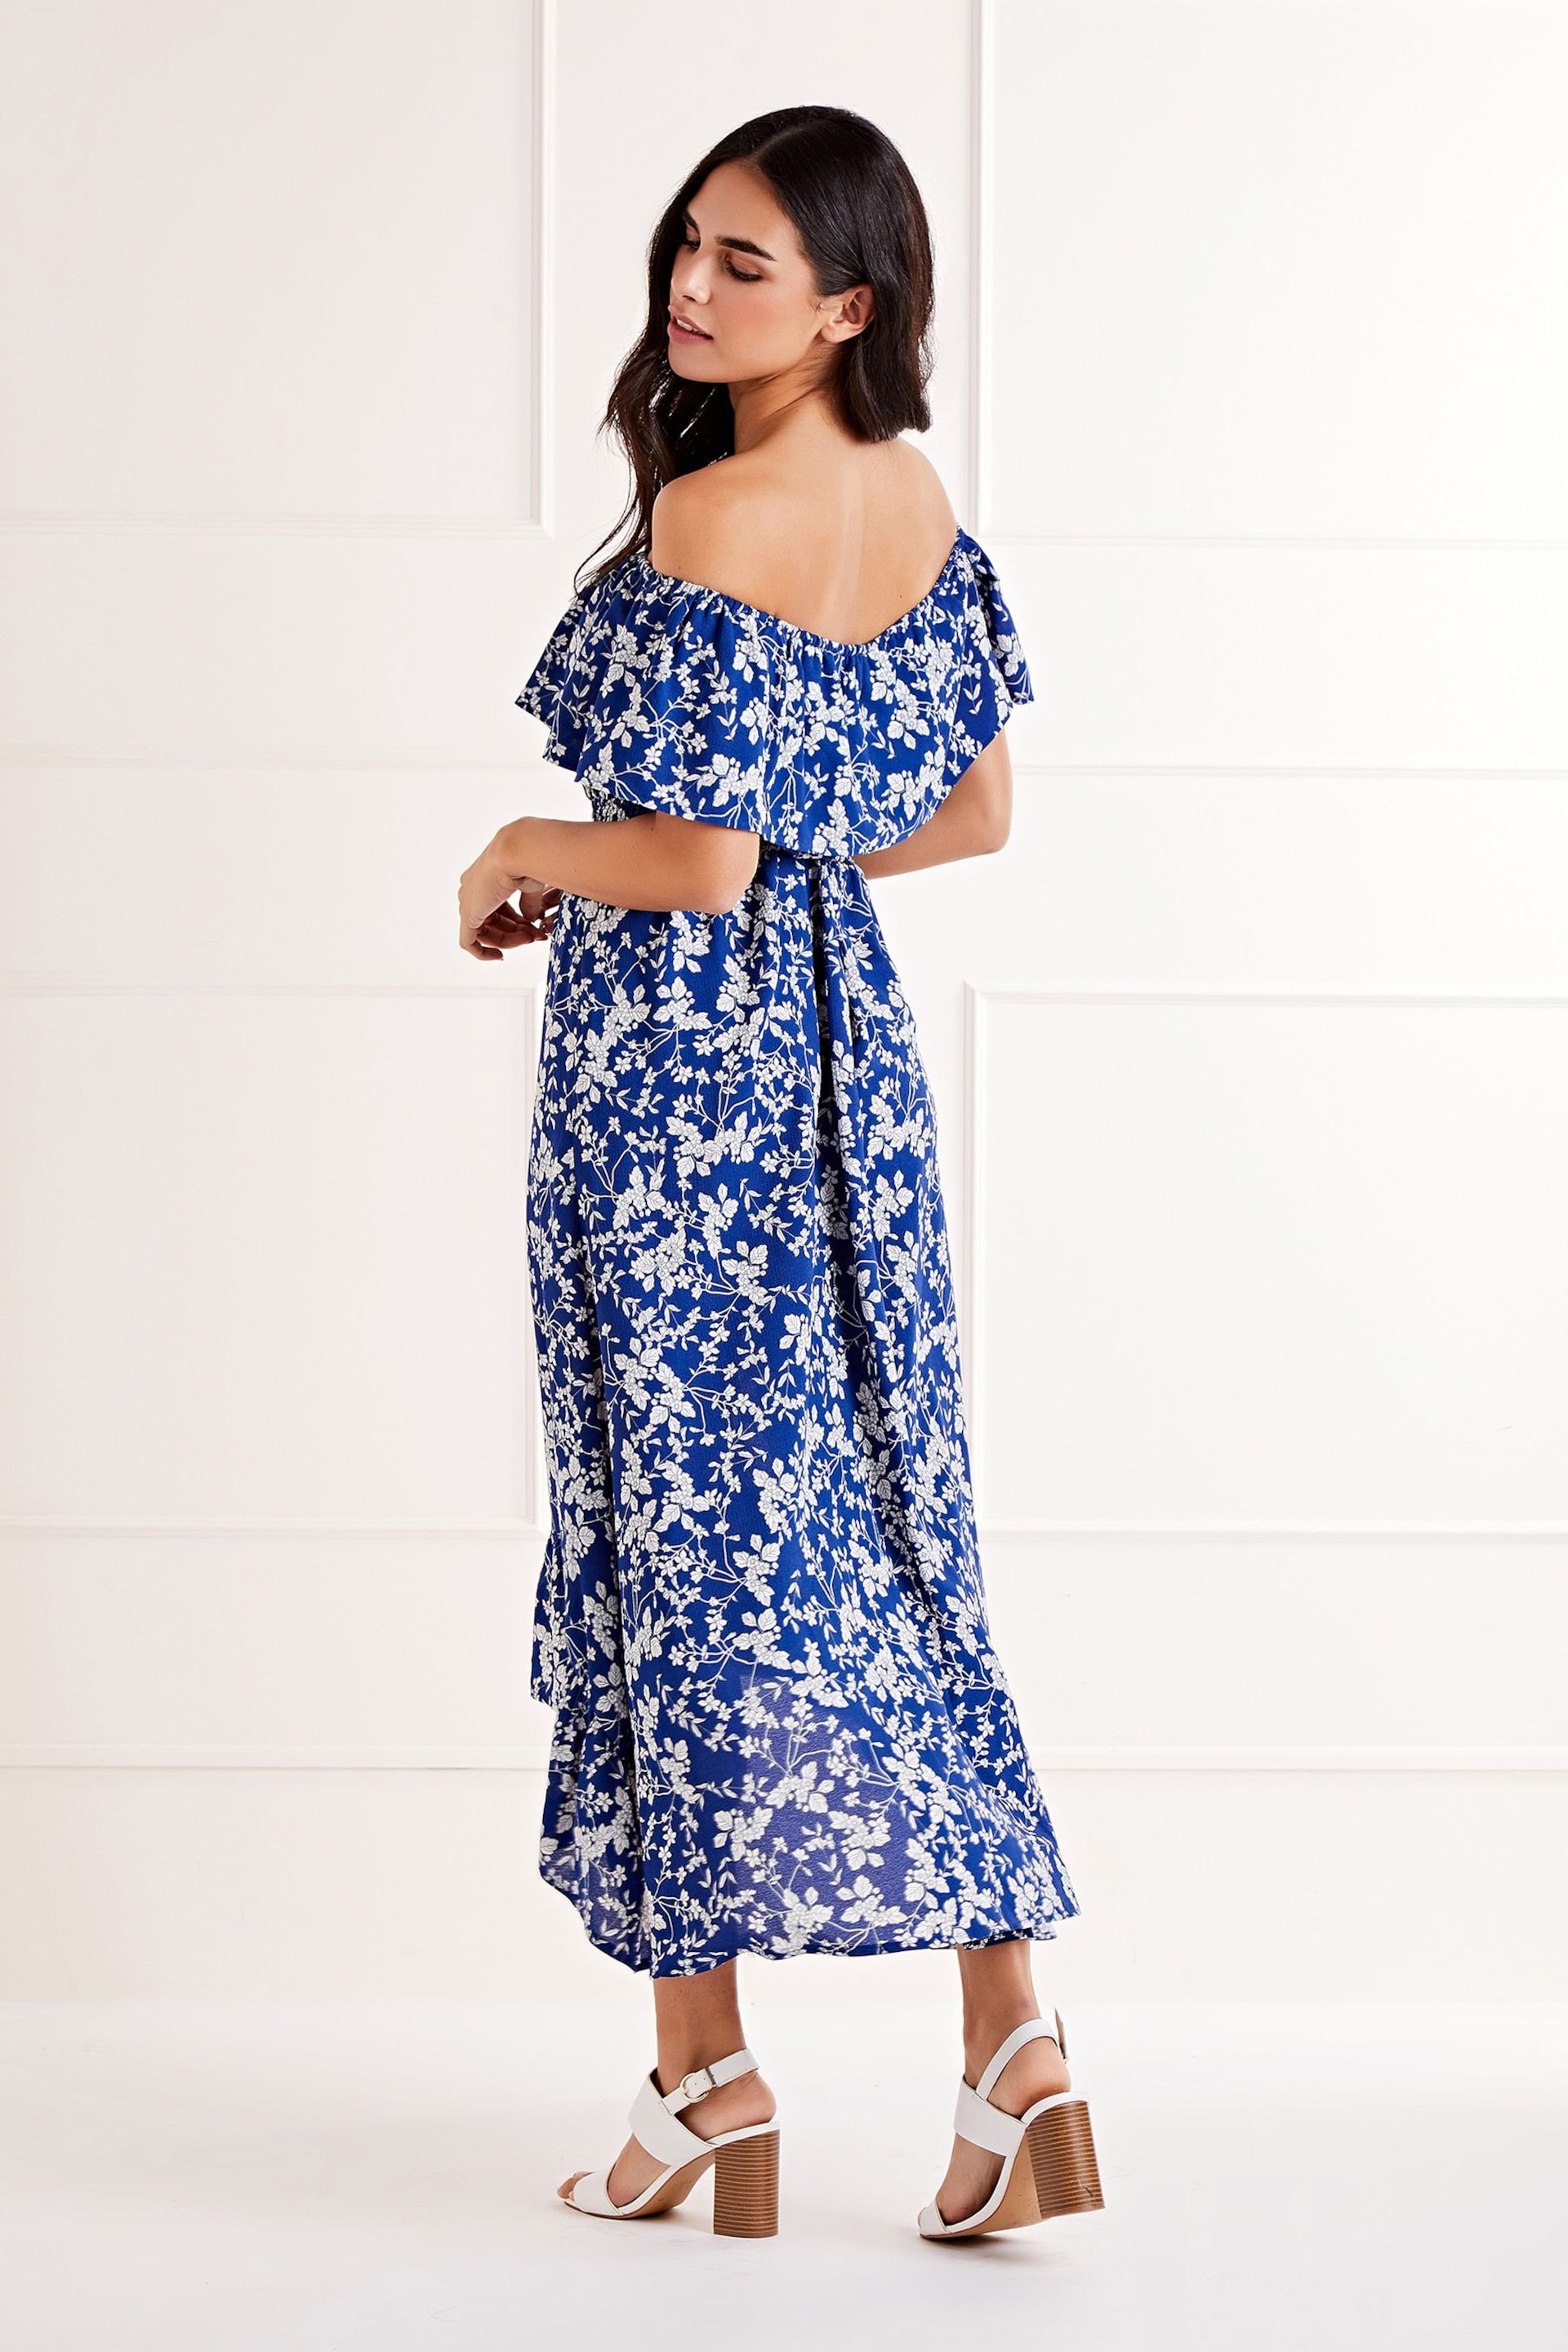 Mela Blue Ditsy Print Bardot Dipped Hem Dress - Image 2 of 4